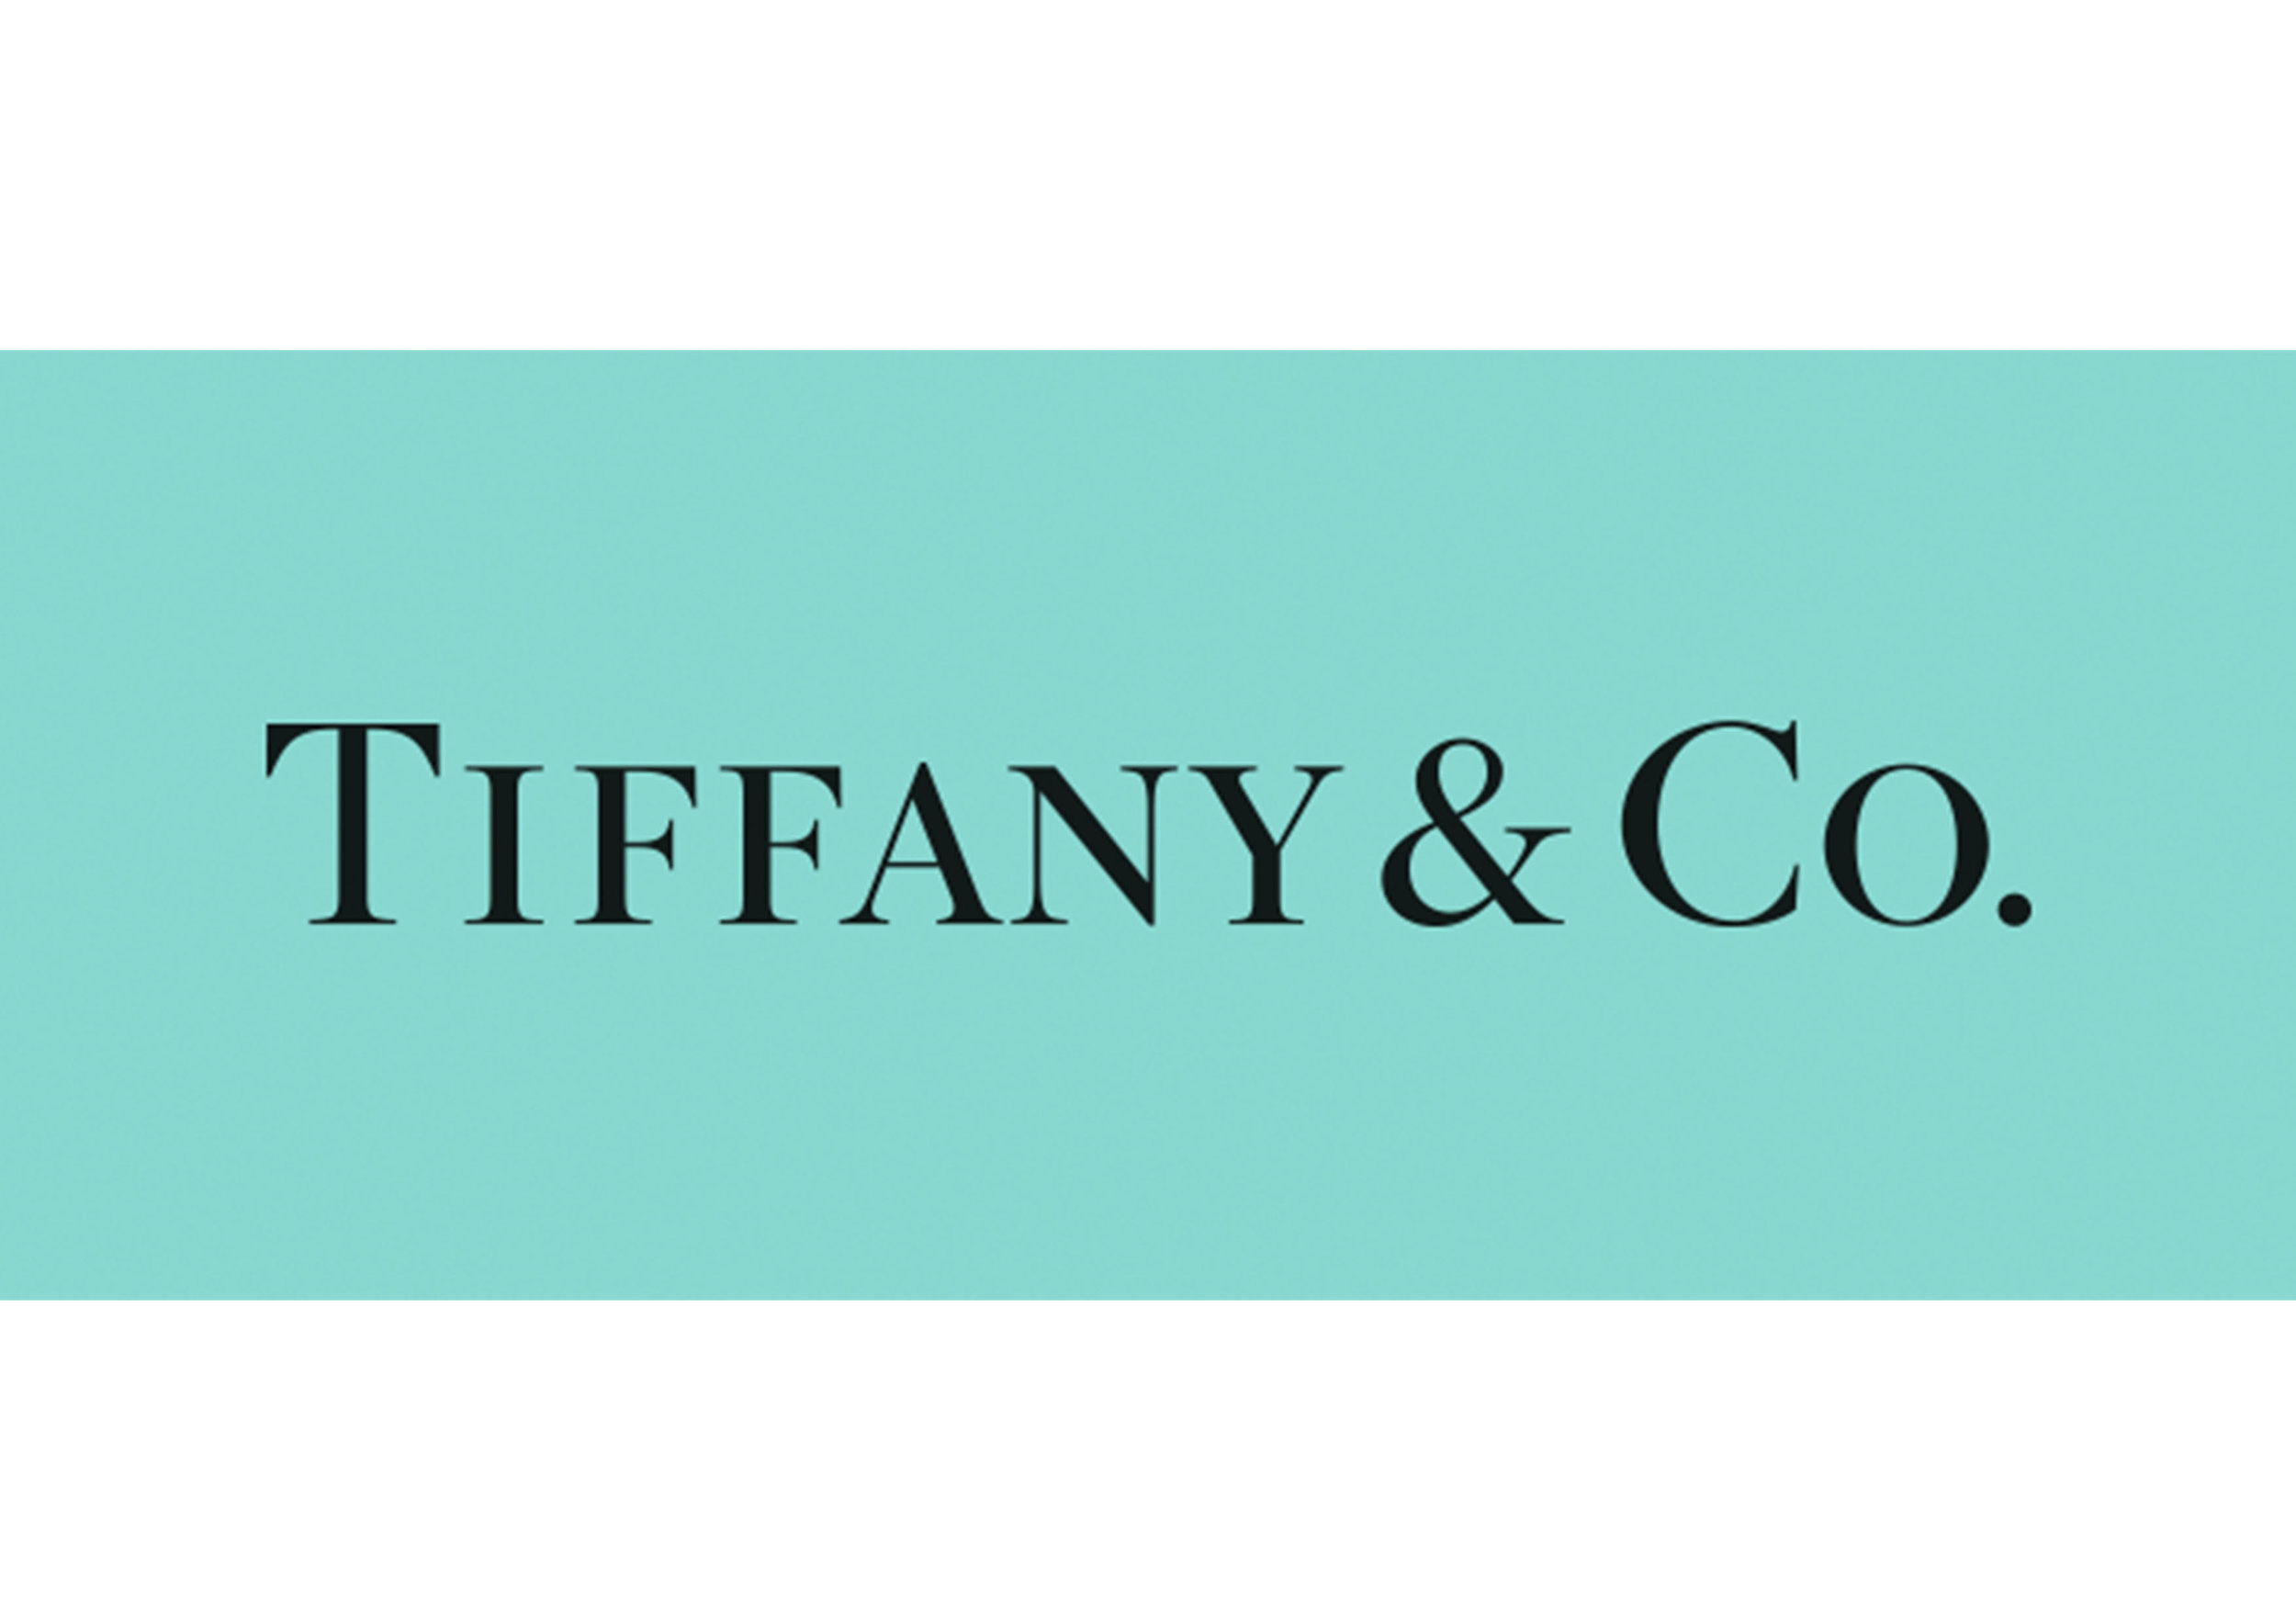 Tiffany & Co.jpg